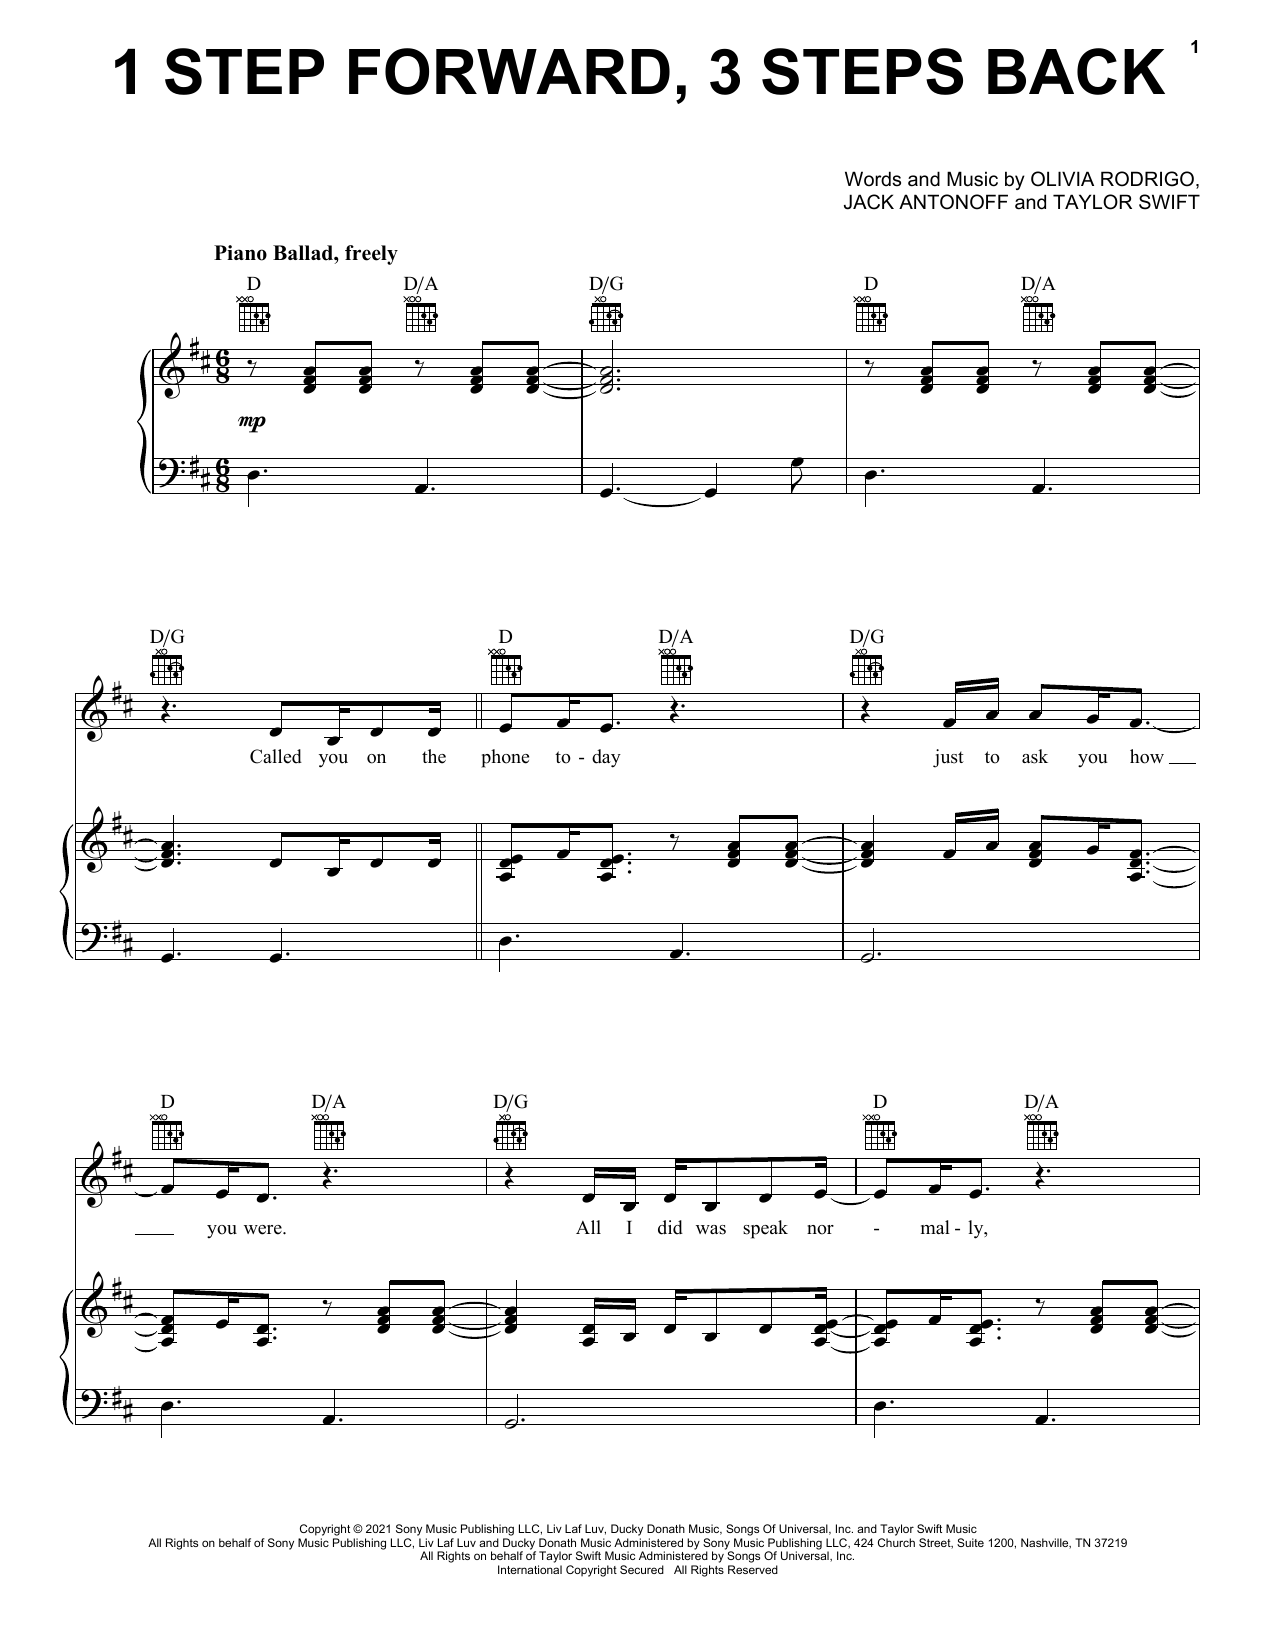 Olivia Rodrigo 1 step forward, 3 steps back Sheet Music Notes & Chords for Easy Piano - Download or Print PDF